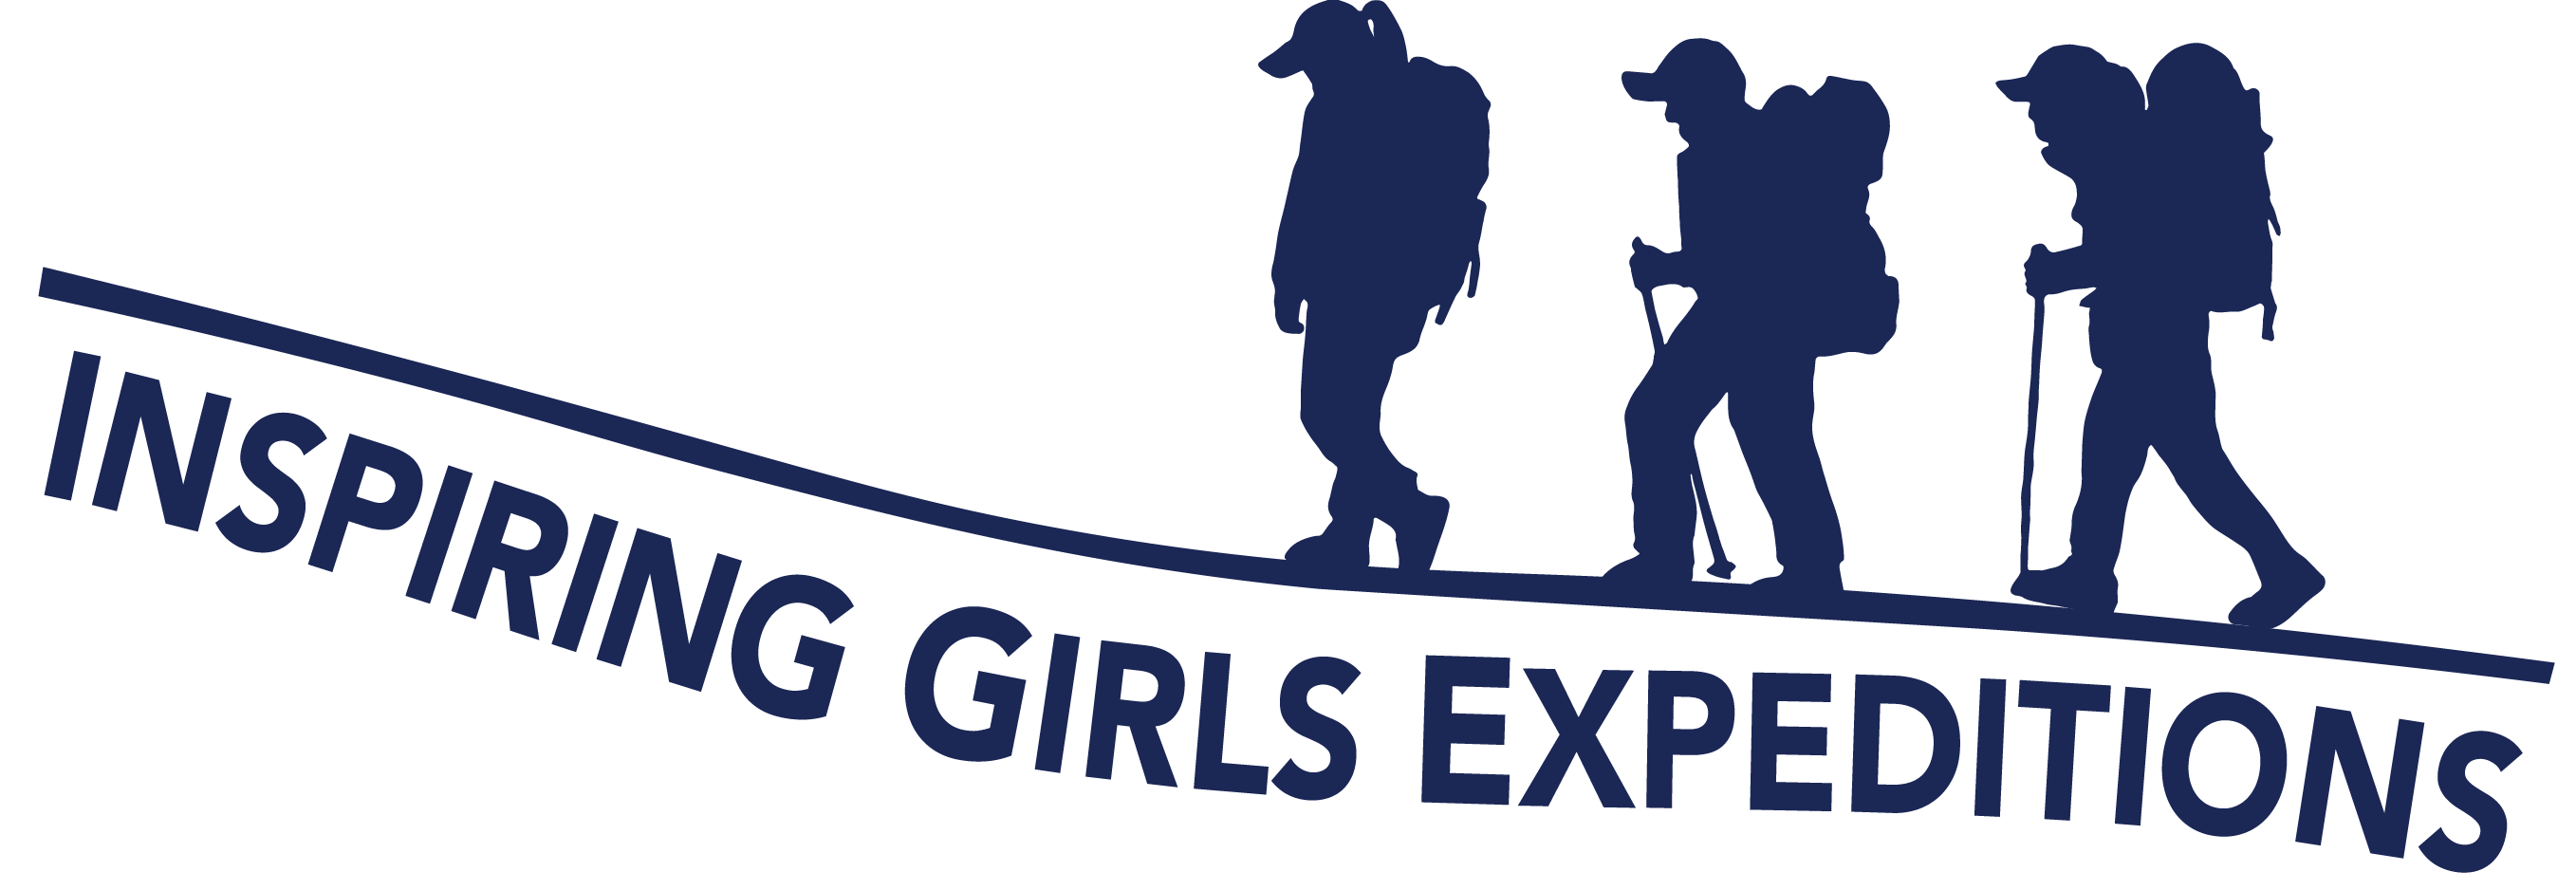 Inspiring Girls* Expeditions logo